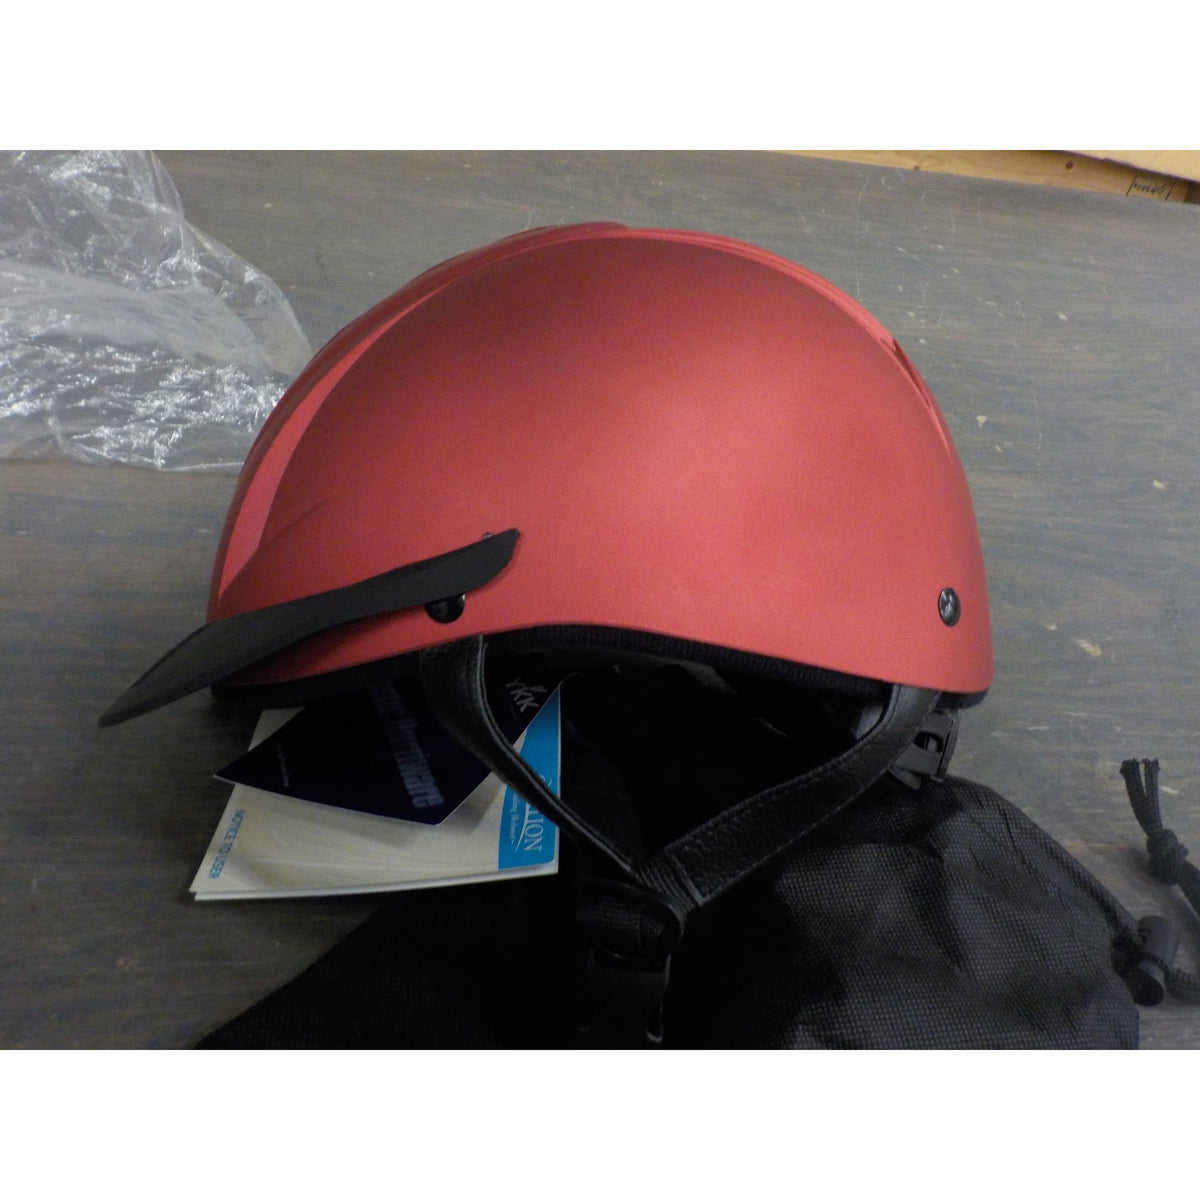 Ovation Metallic Schooler Helmet - Red - X-Small/Small - Used